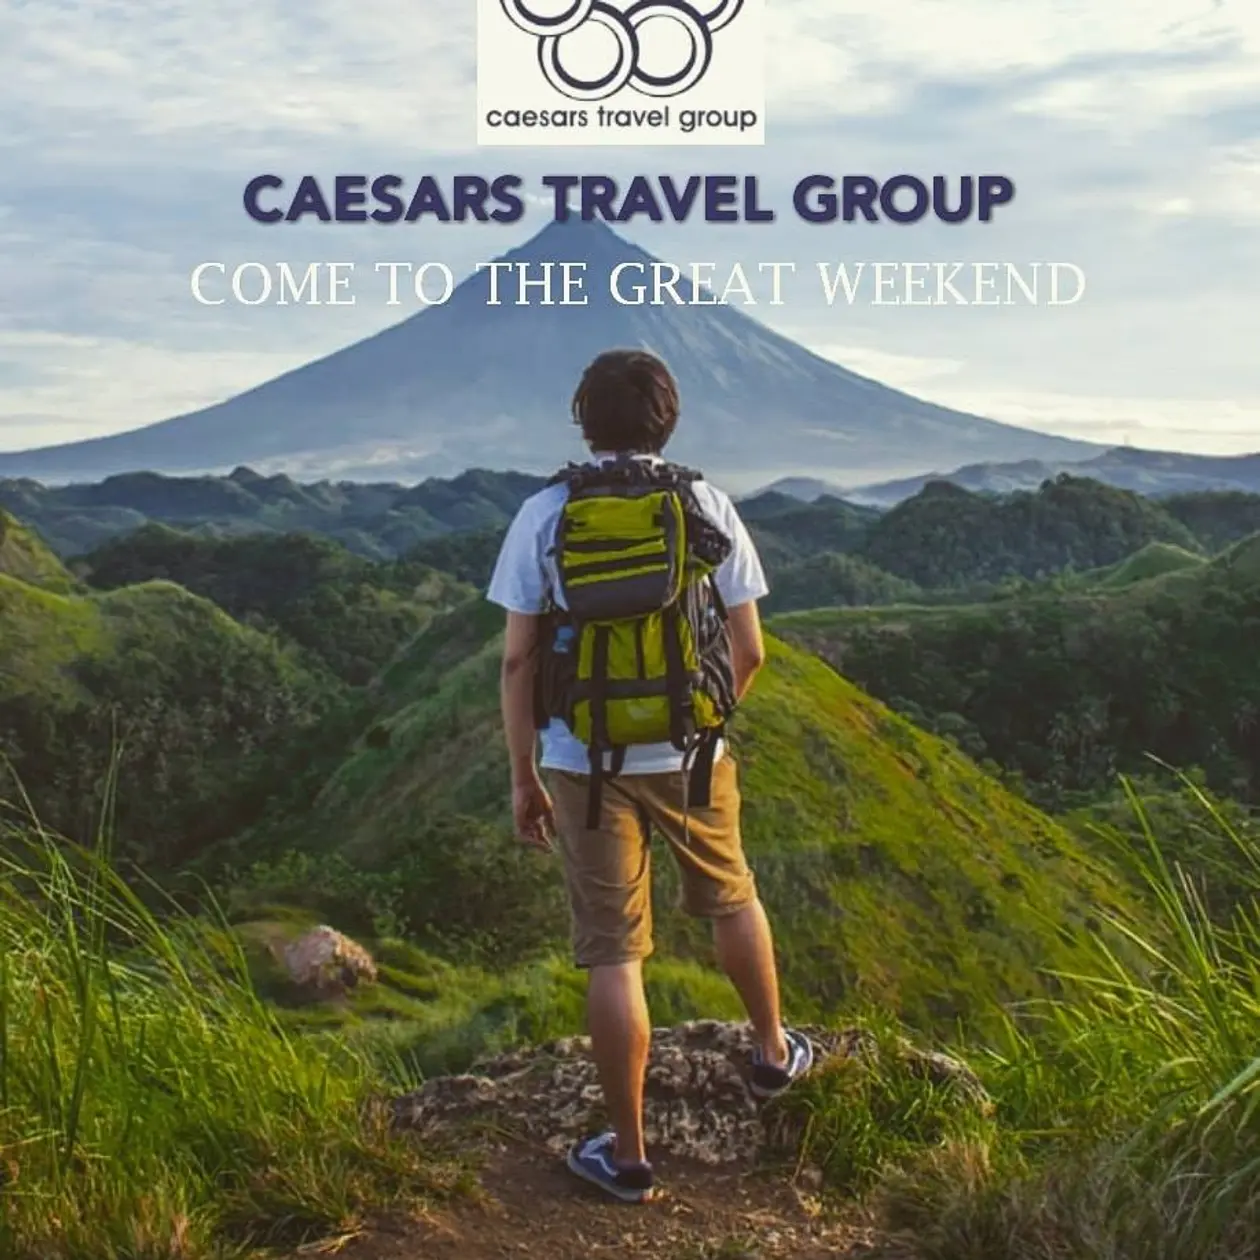 Caesars Travel Group